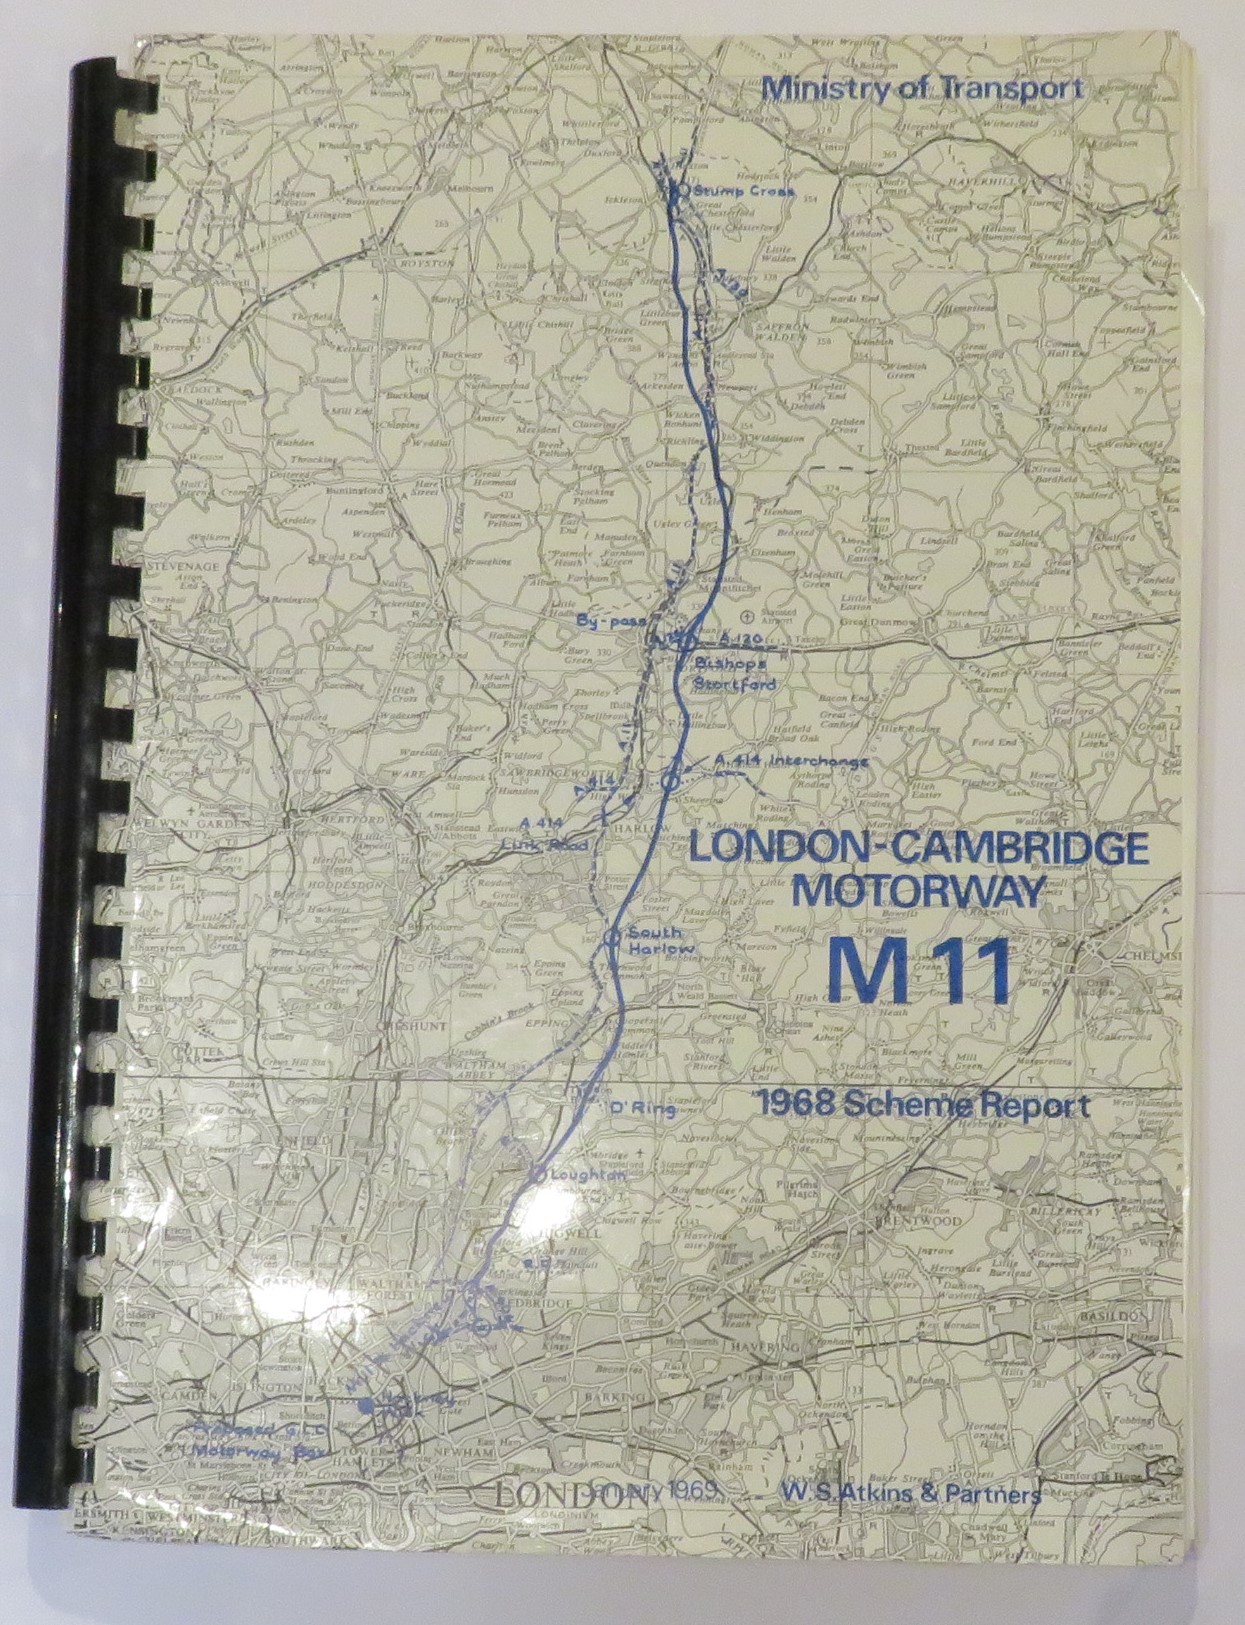 Londonâ€”Cambridge Motorway M11: 1968 Scheme Report